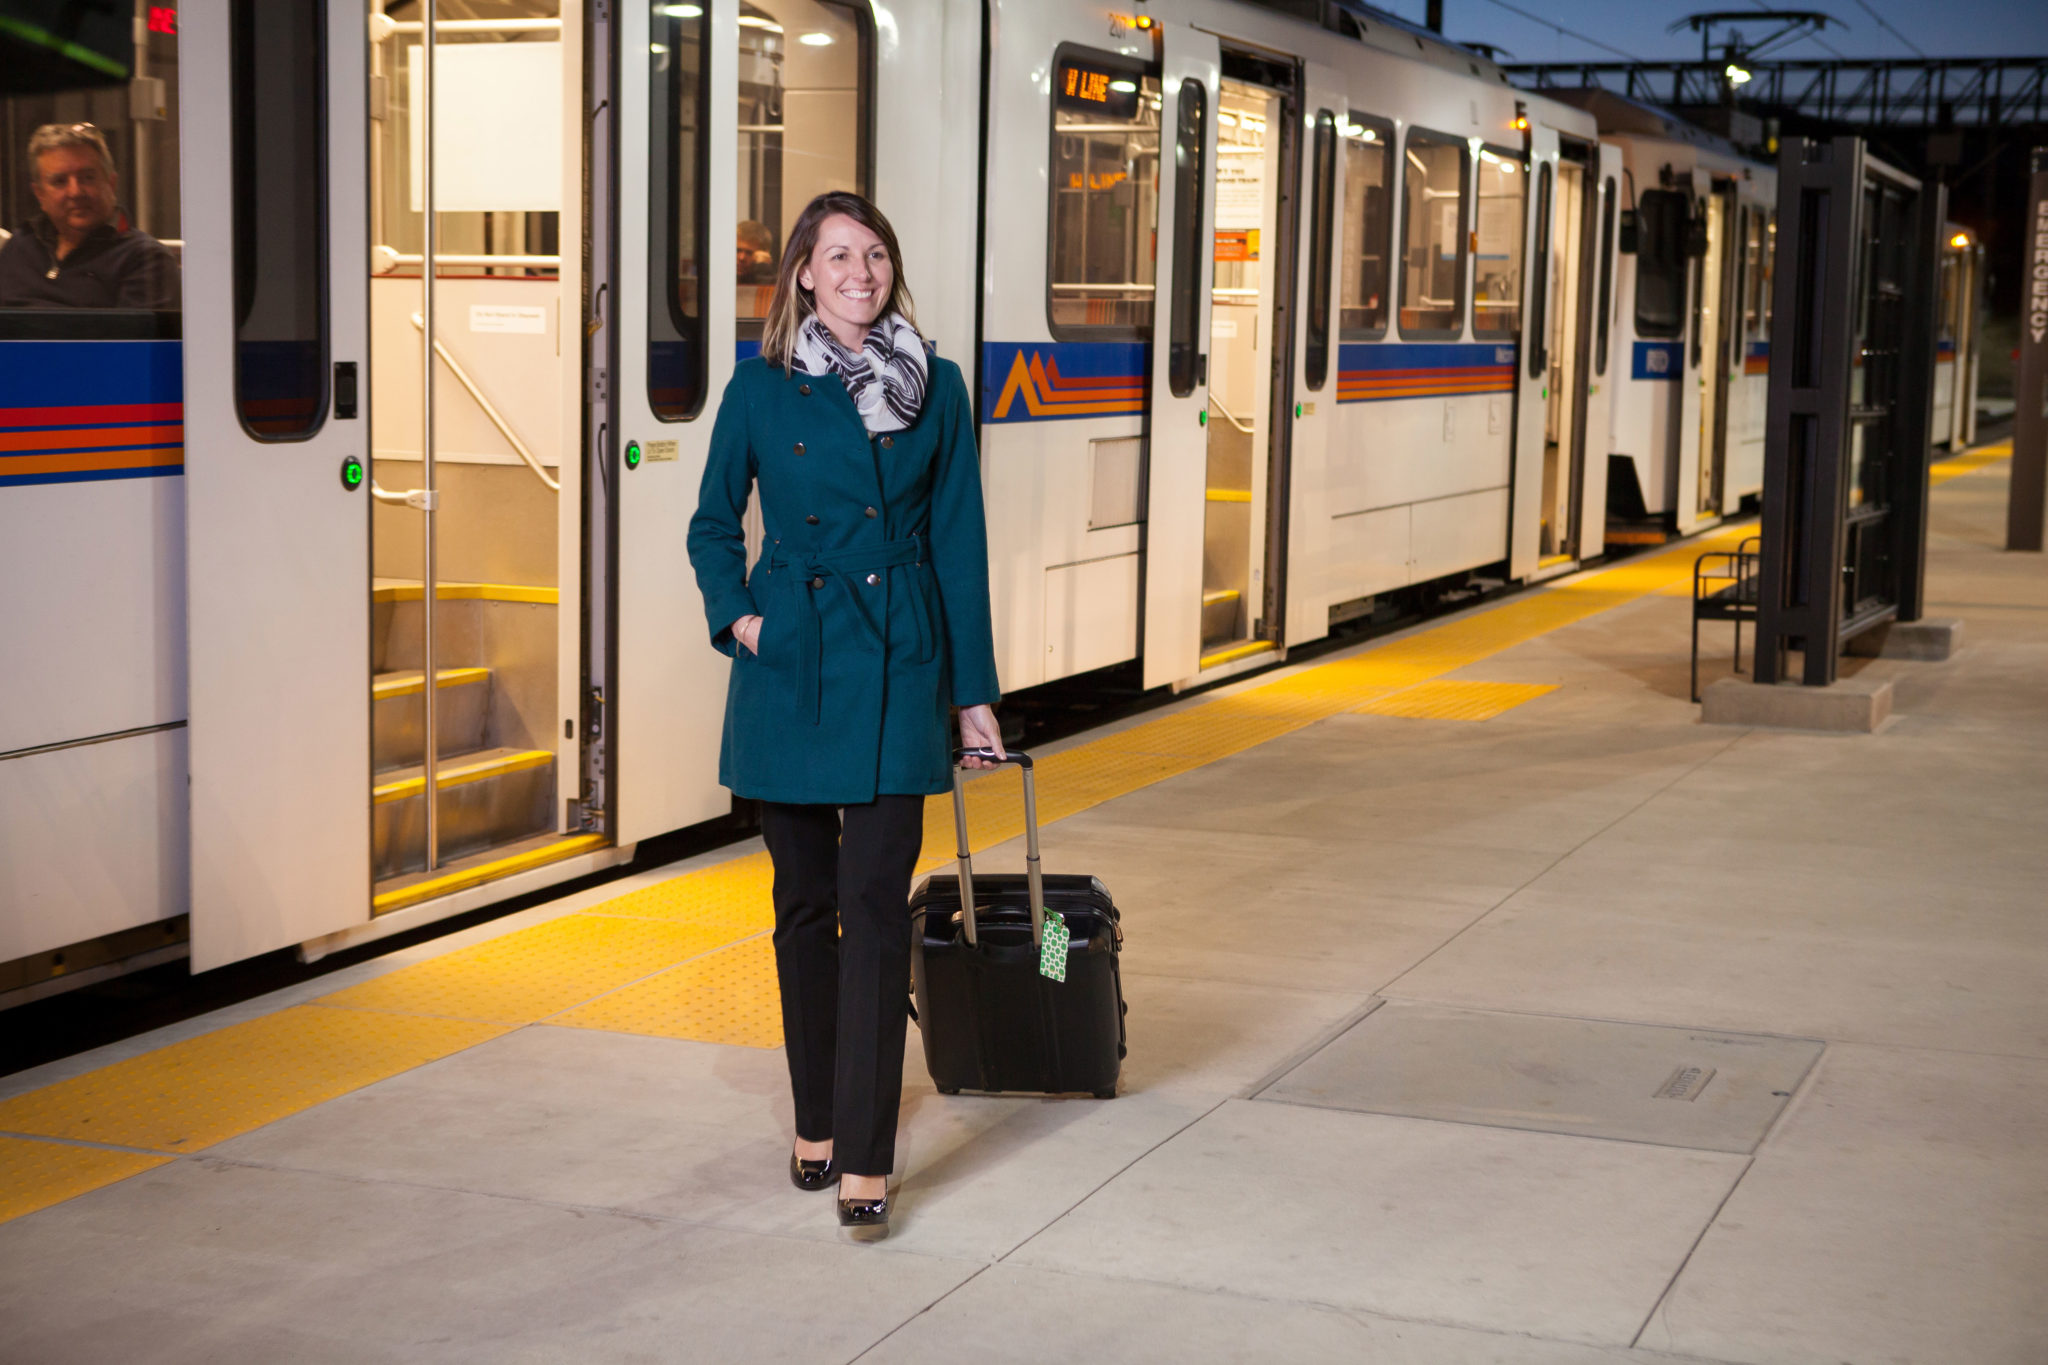 Uber Transit in Denver gives passengers integrated ticketing